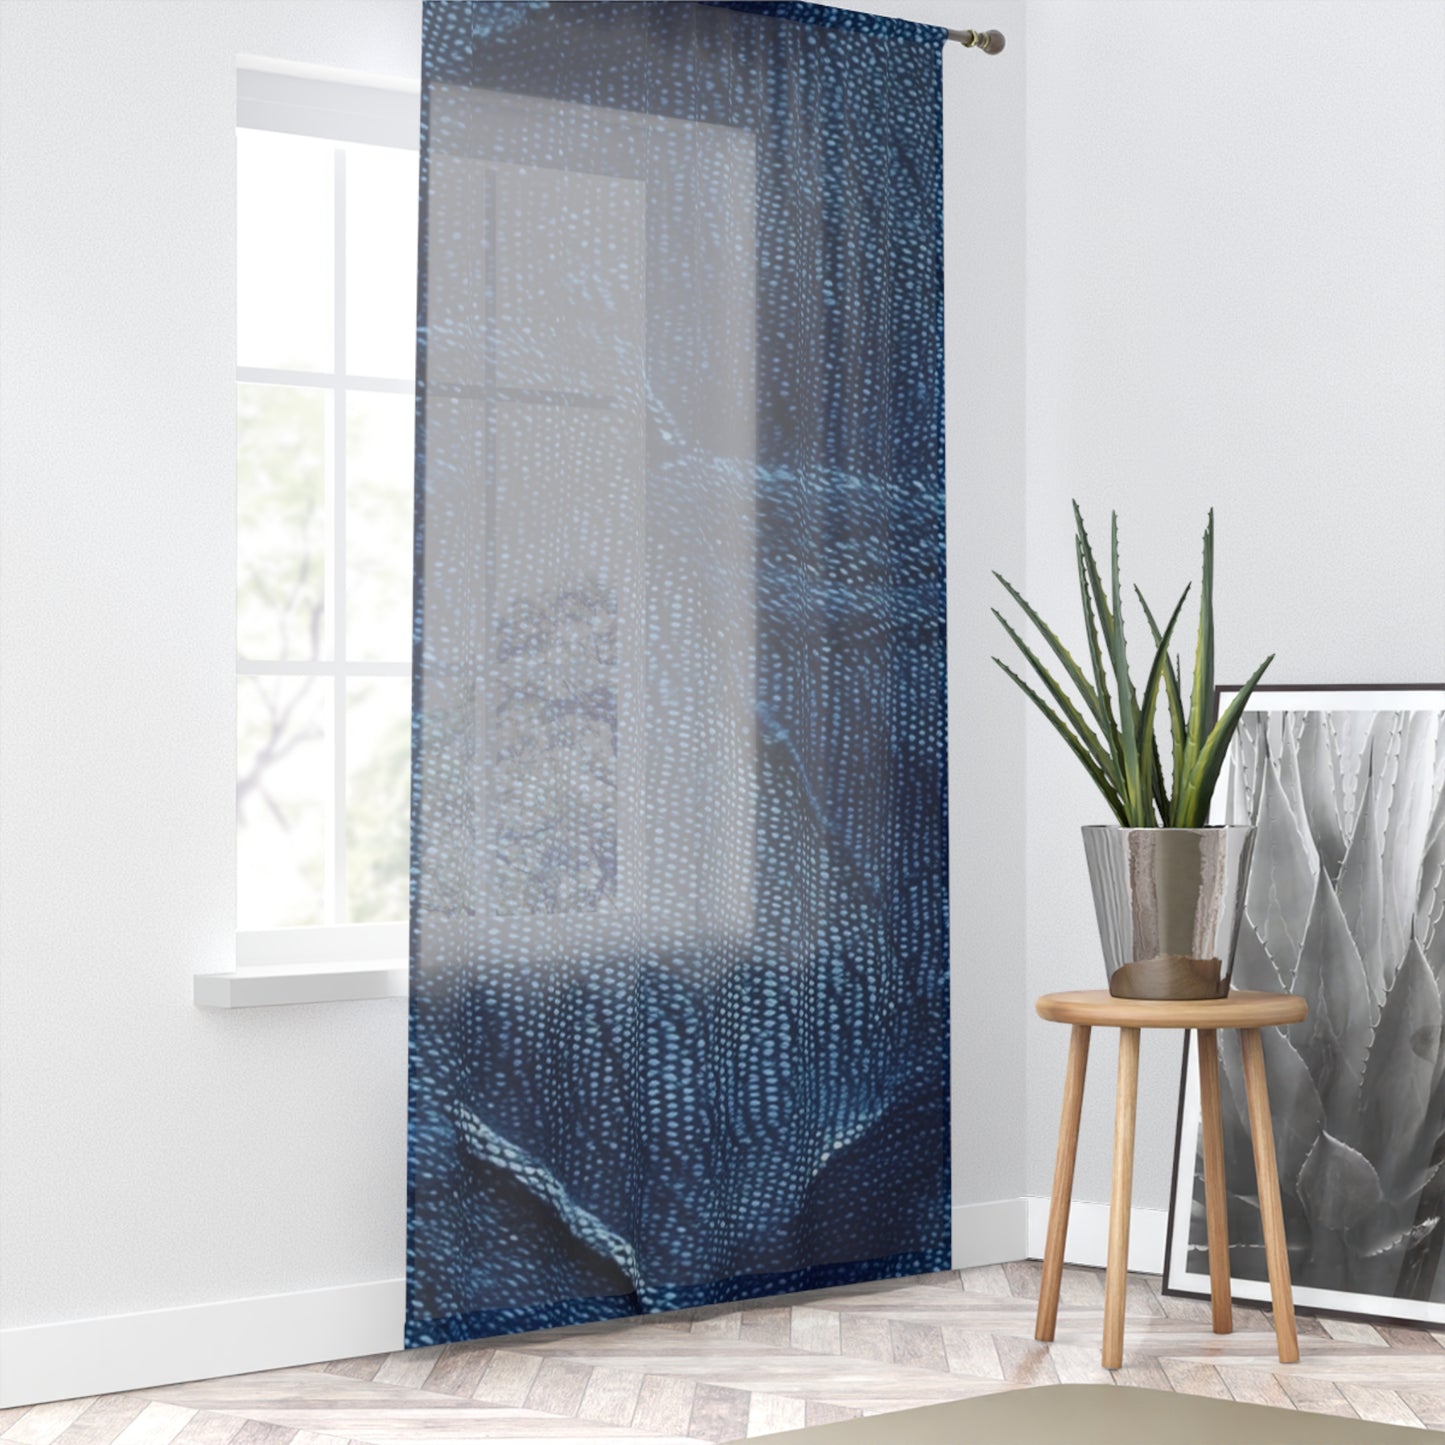 Dark Blue: Distressed Denim-Inspired Fabric Design - Window Curtain